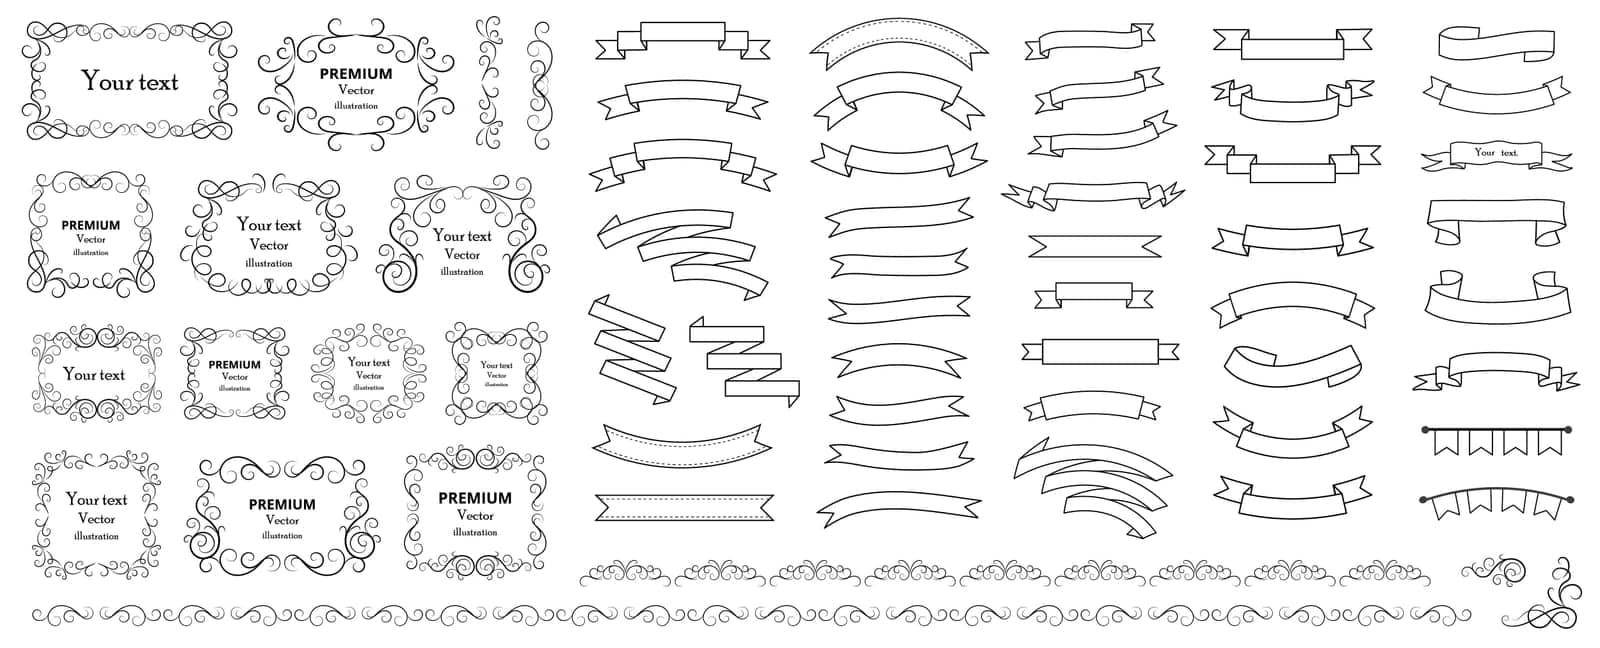 Calligraphic design elements . Ribbon elements. Decorative swirls or scrolls, vintage frames , flourishes, labels and dividers. Retro vector illustration.